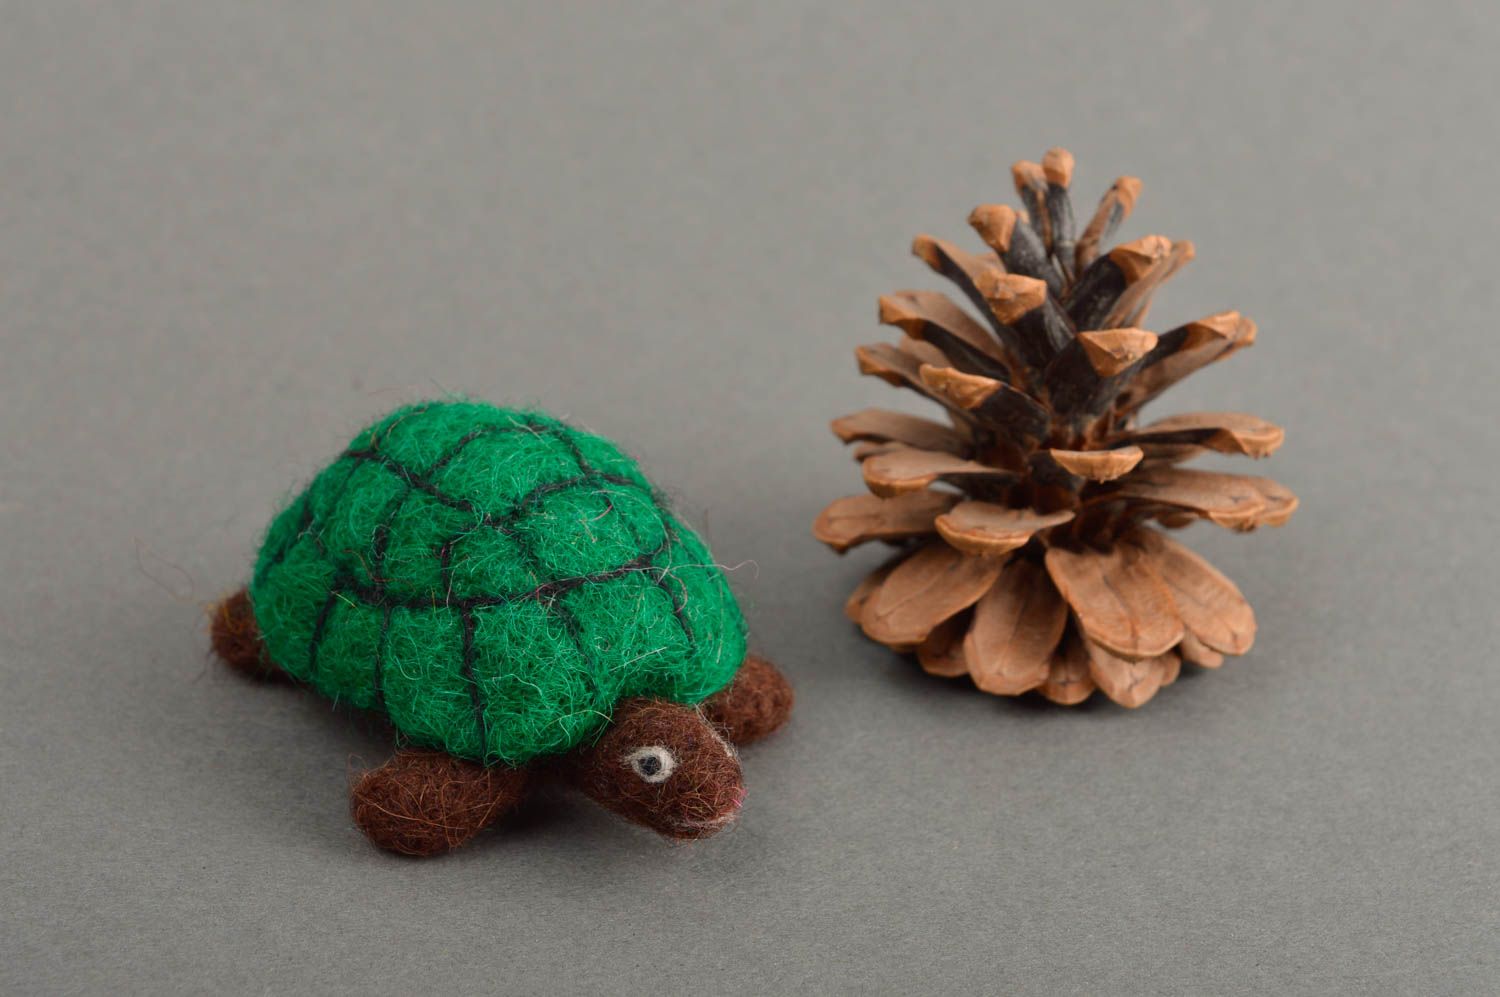 Handmade toy unusual toy for kids designer toy woolen toy for nursery decor photo 1